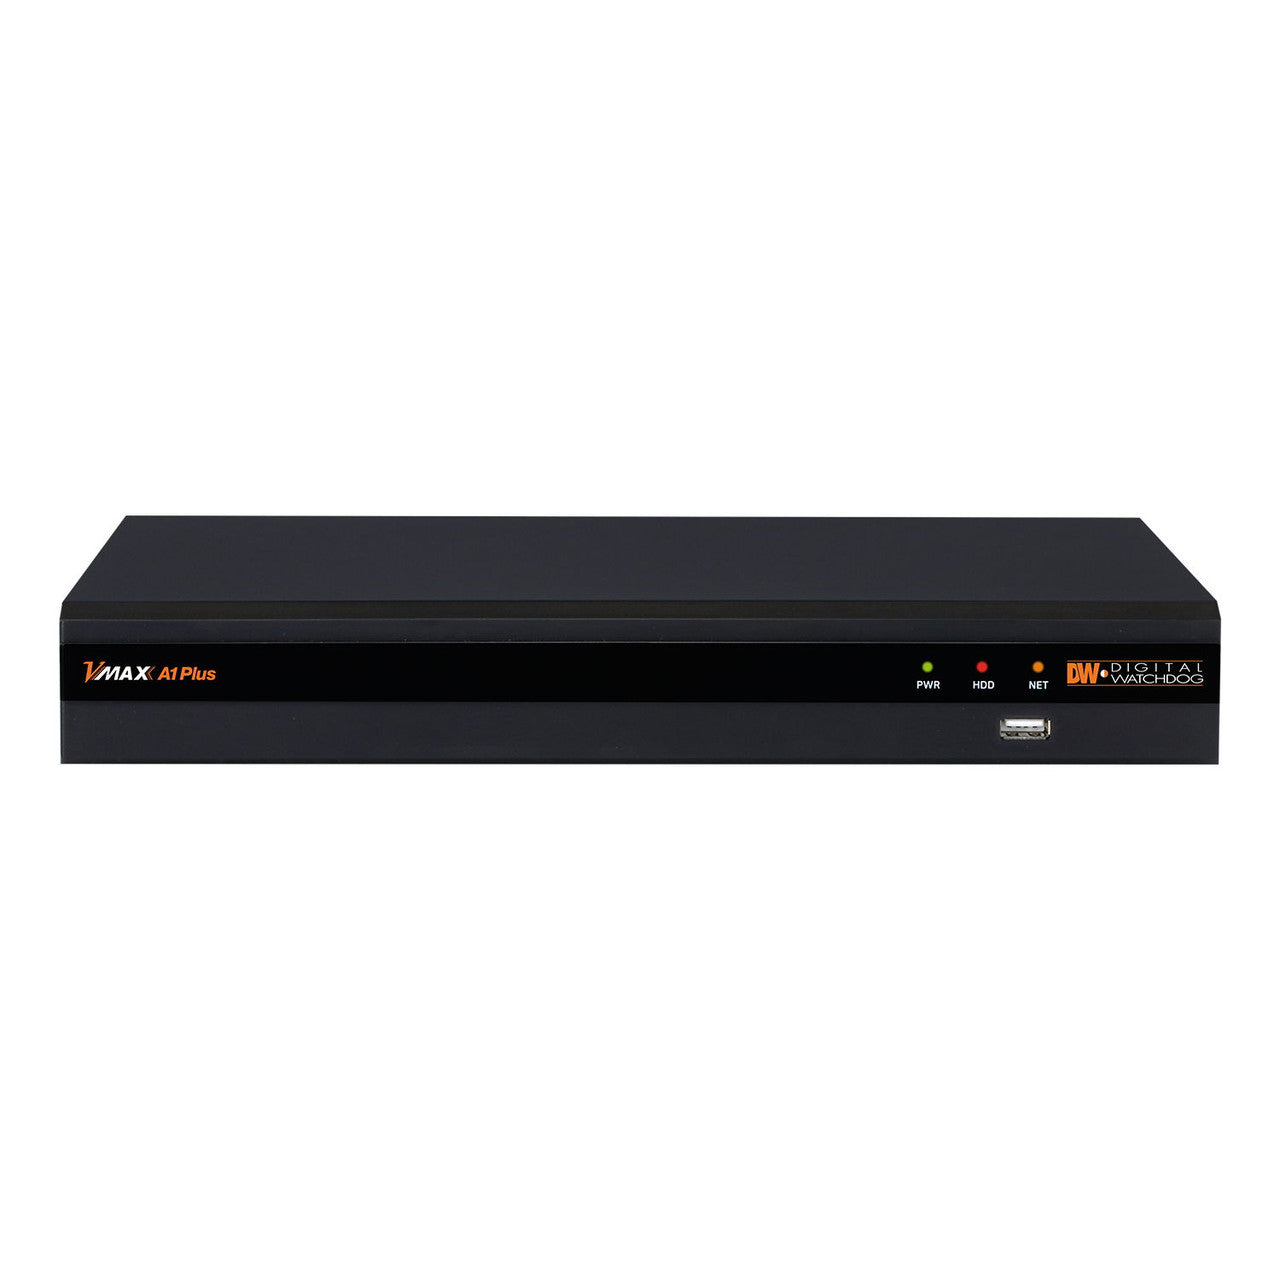 Digital Watchdog DW-VA1P83T HD over Coax 8-Channel DVR - 3TB HDD included